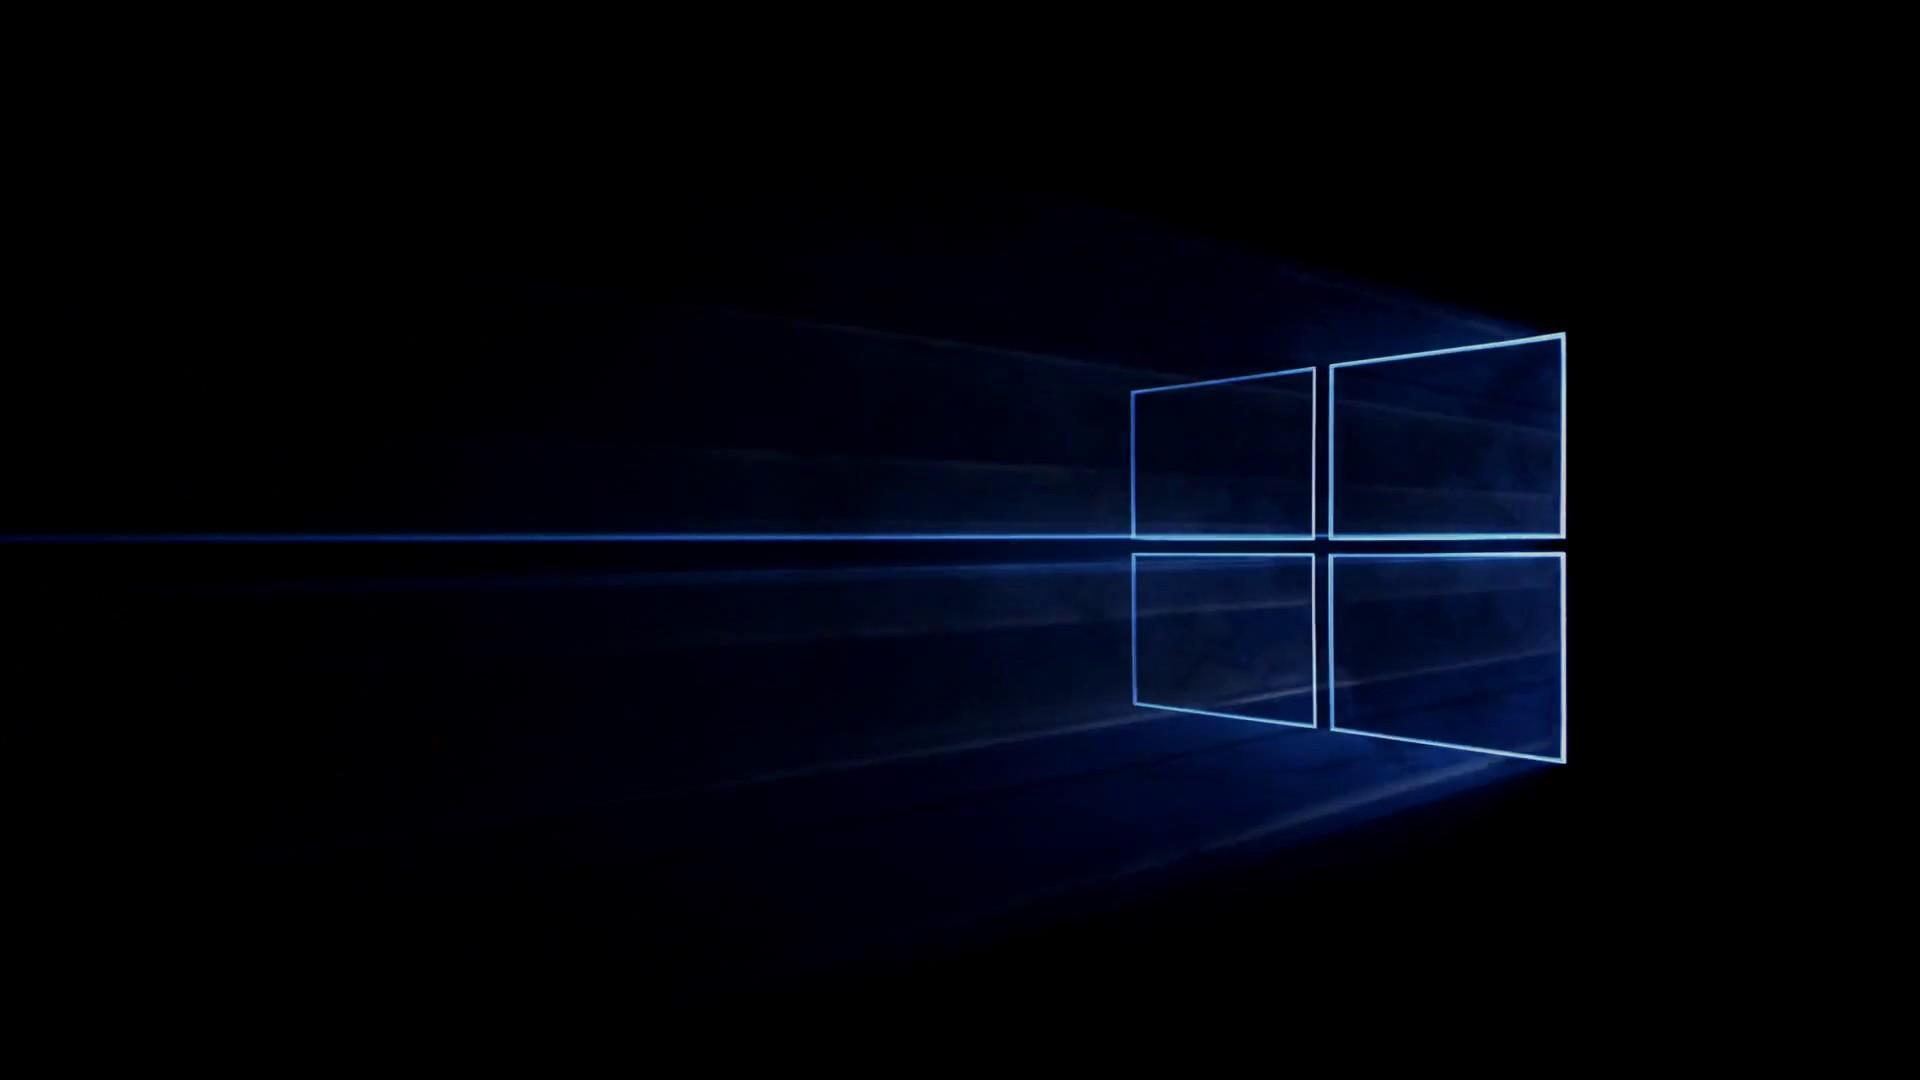 New Windows 10 Wallpaper Leak in Build 10154 Screenshots